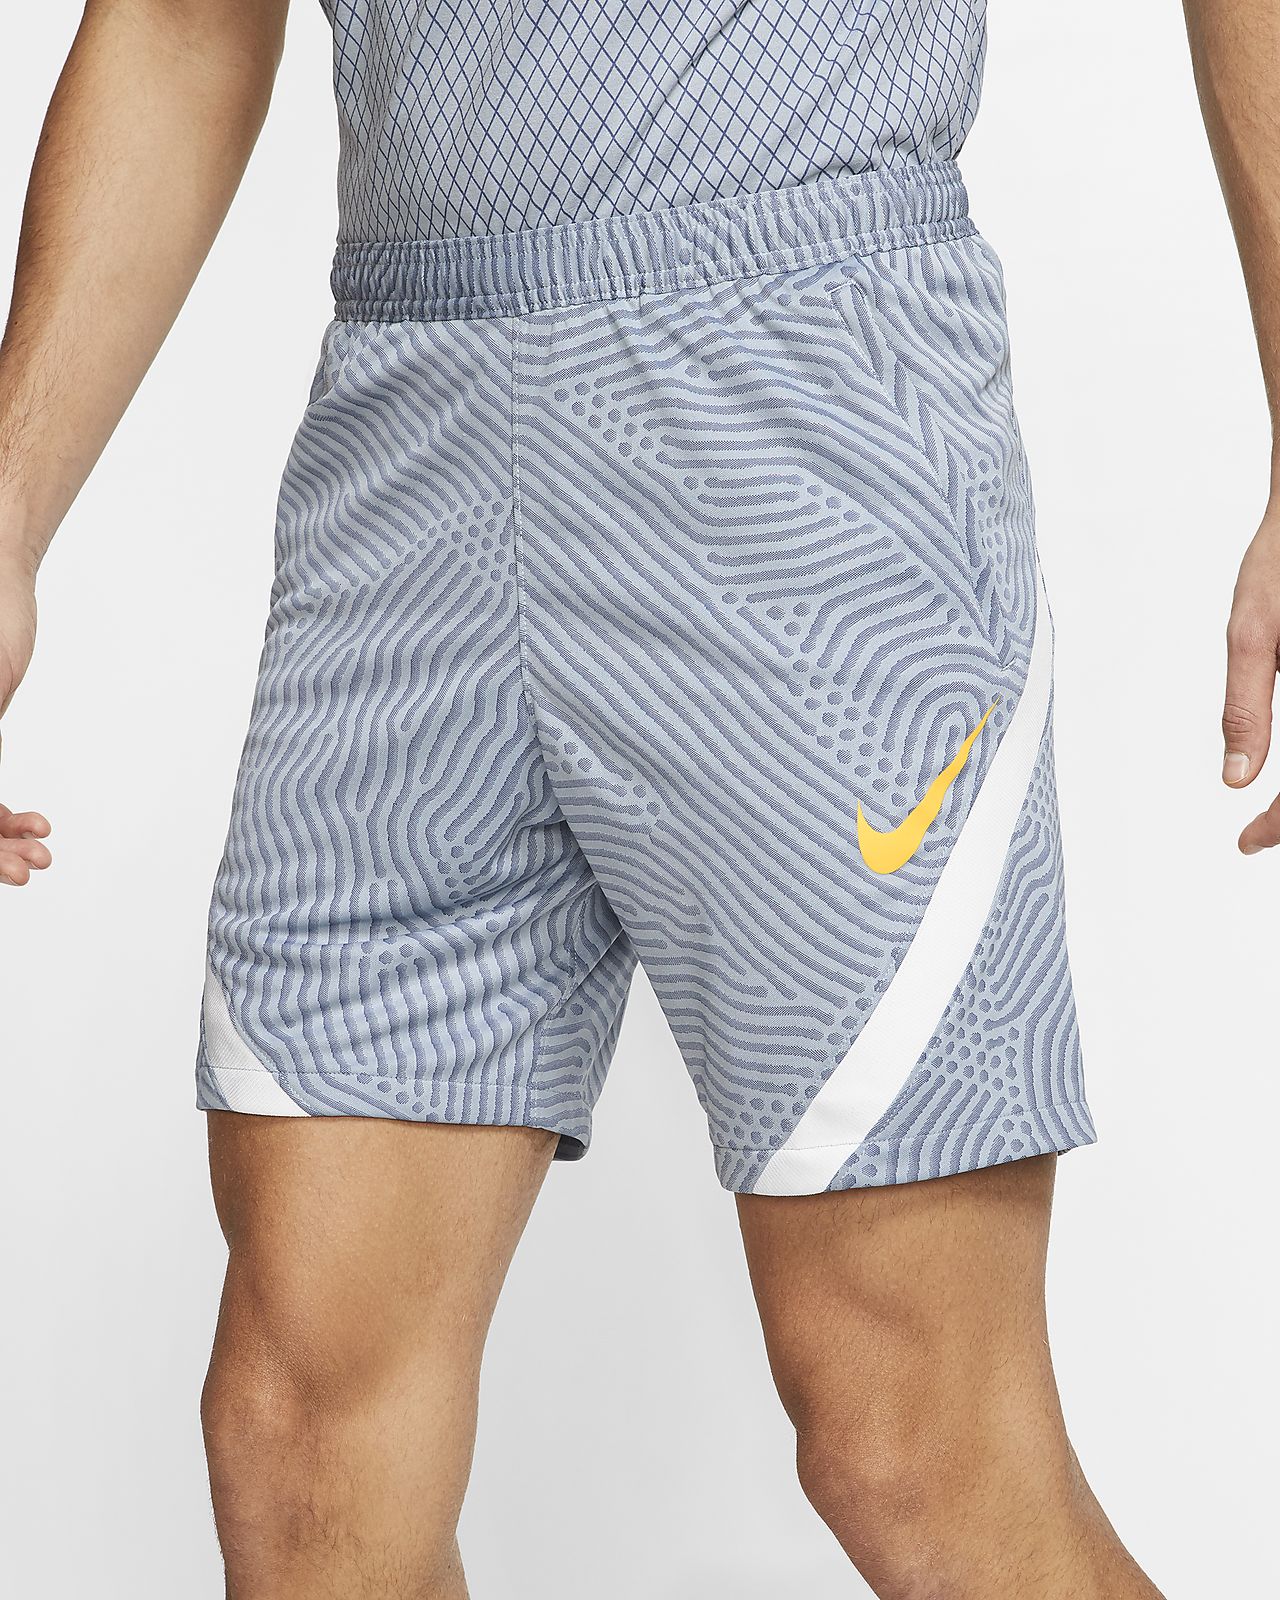 nike football shorts with zip pockets